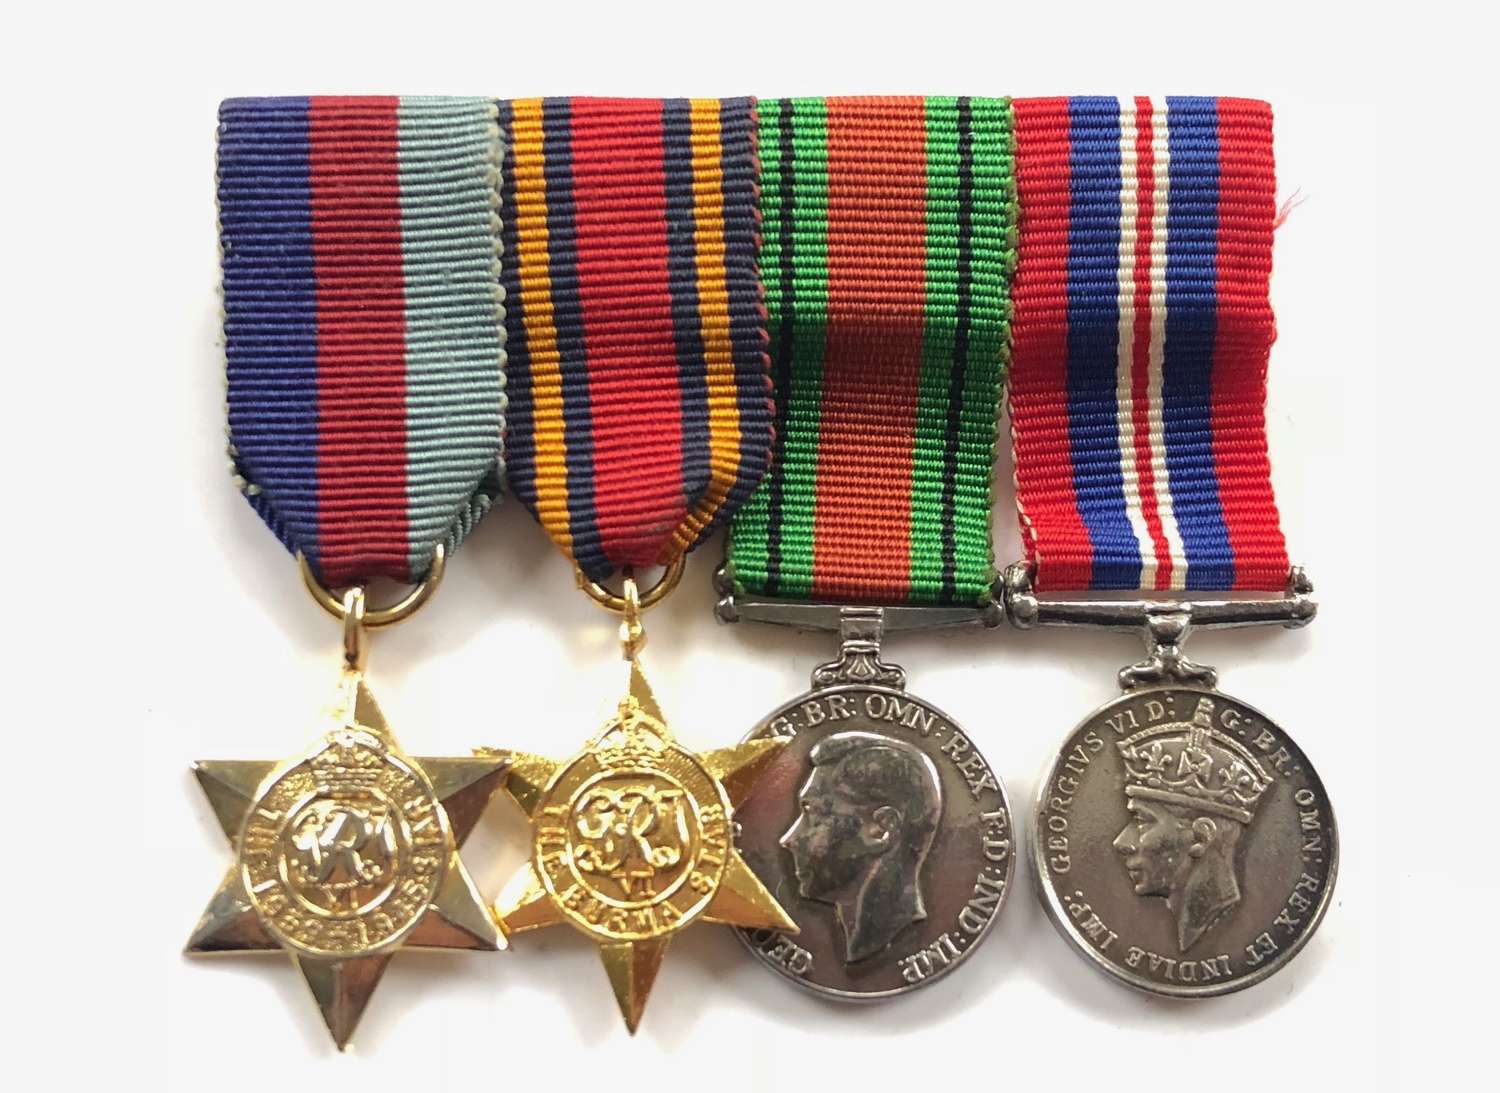 WW2 Burma Star Miniature Medal Group.